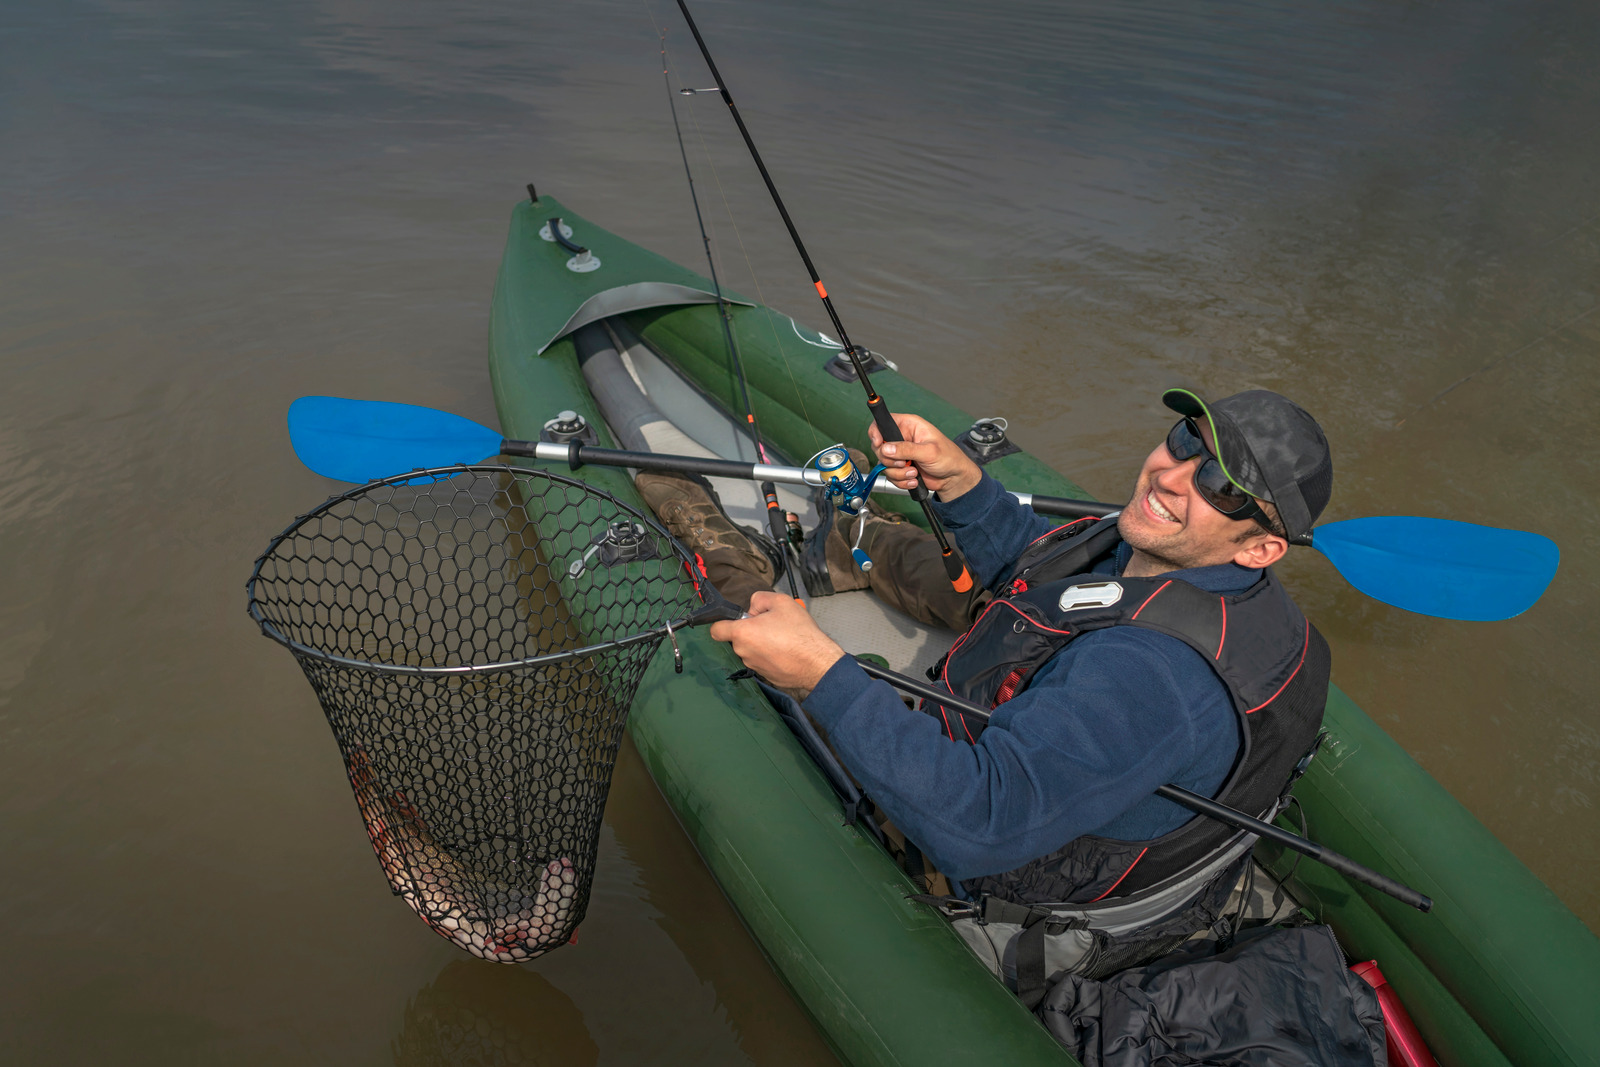 Kayak fishing at lake. Fisherman caught pike fish on inflatable boat with fishing tackle.